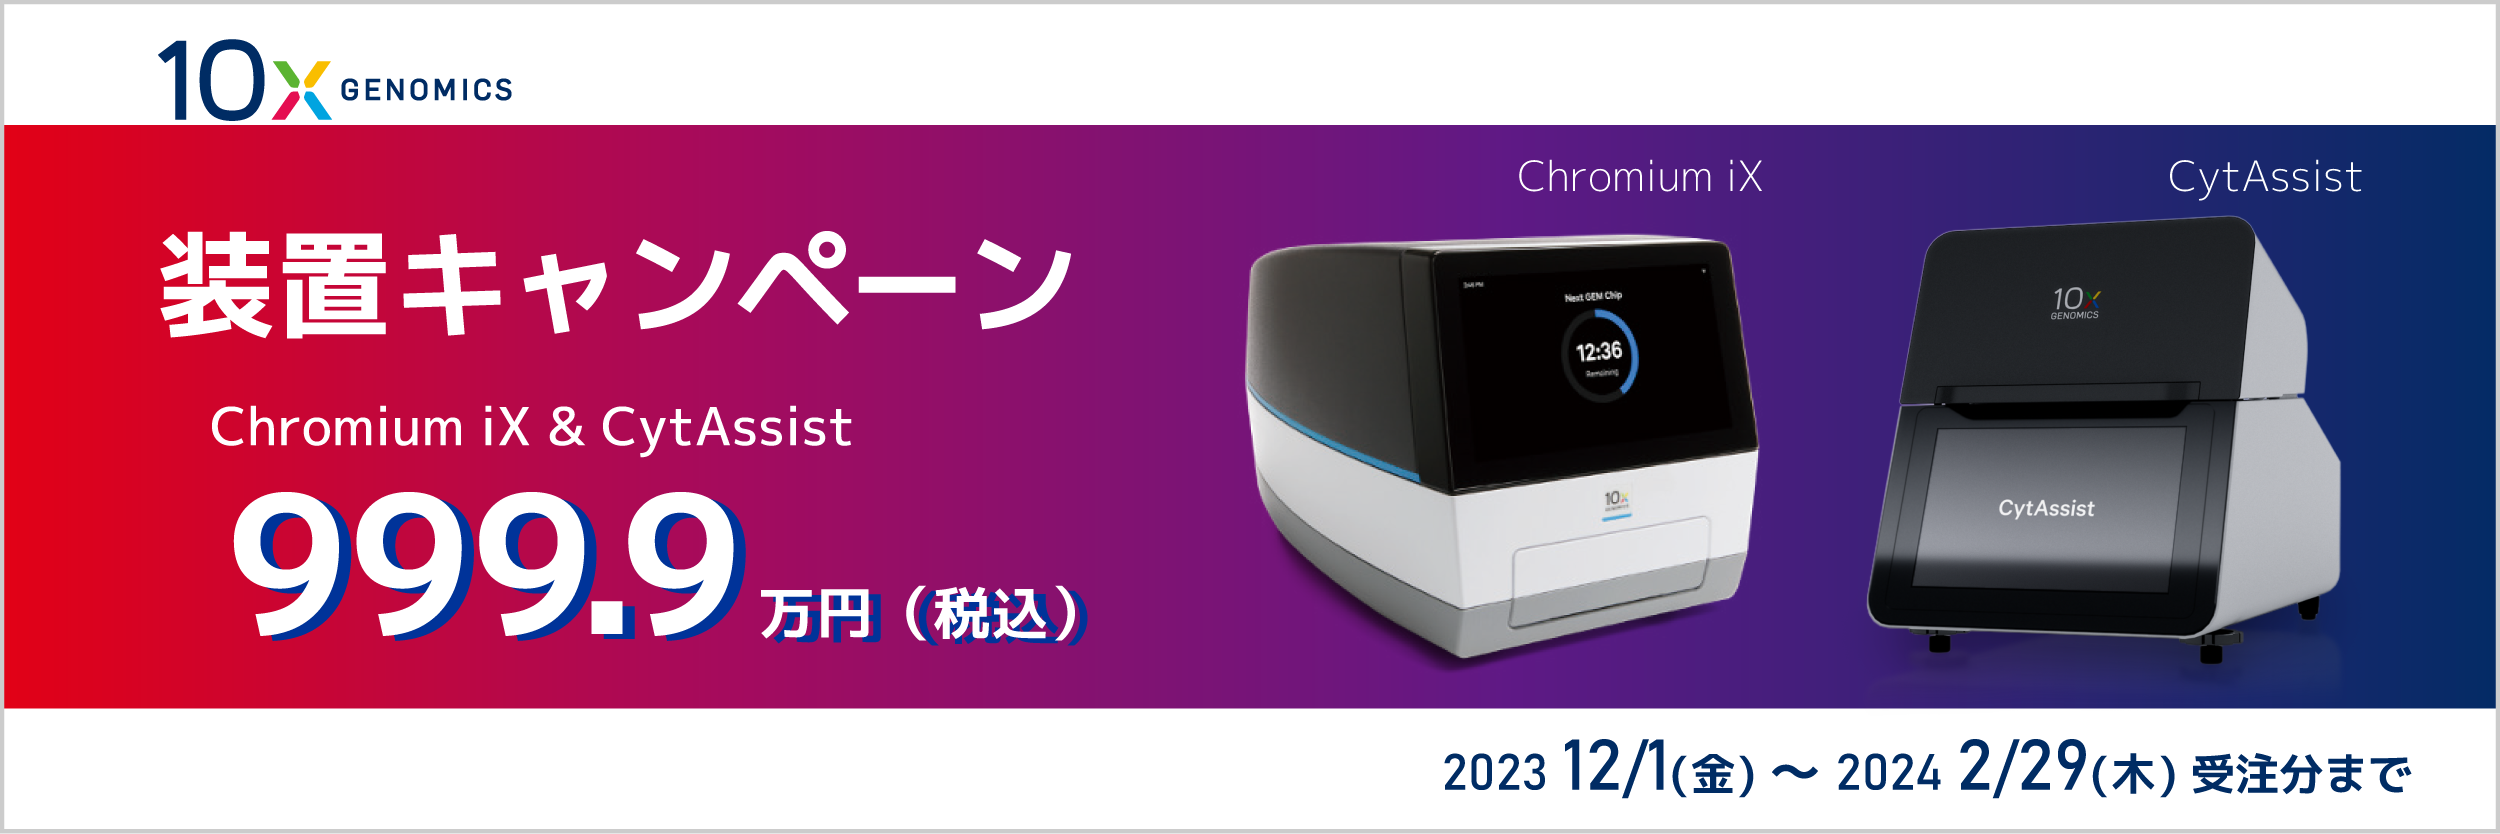 10x Genomics 装置キャンペーン 2023秋冬